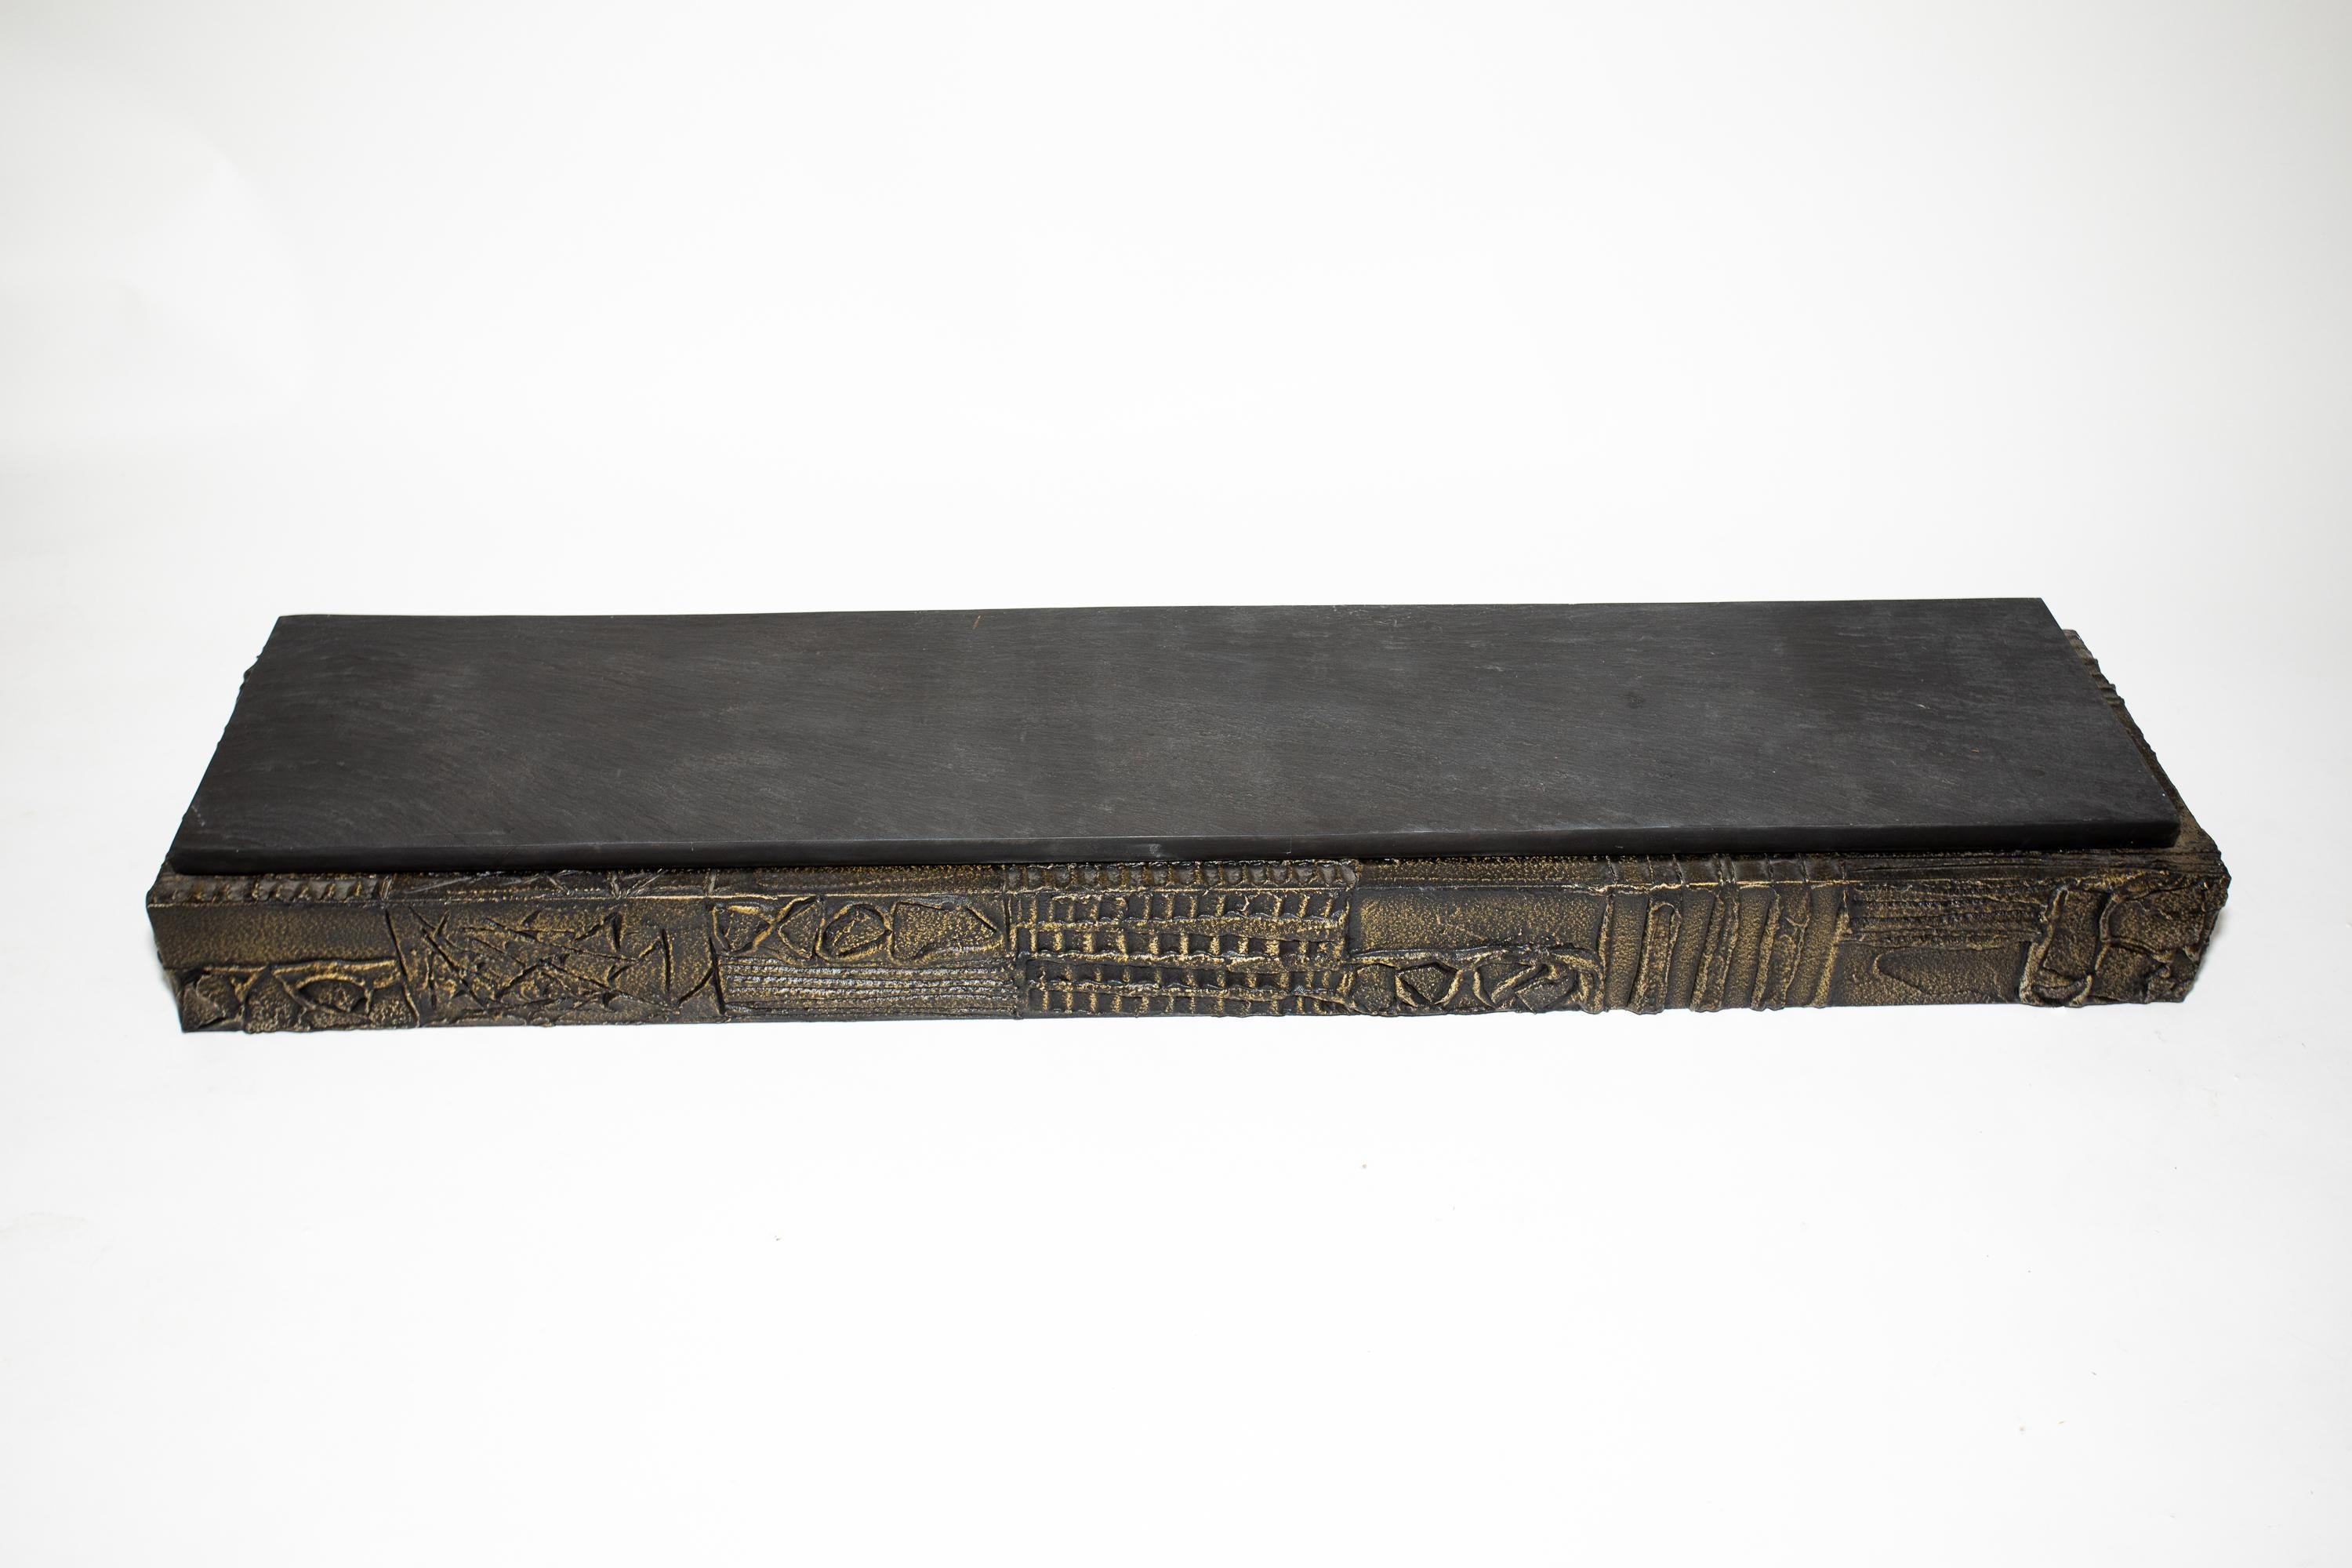 Paul Evans Sculpted Bronze Wall Shelf
Original Thick Cleft Slate top
Signed 